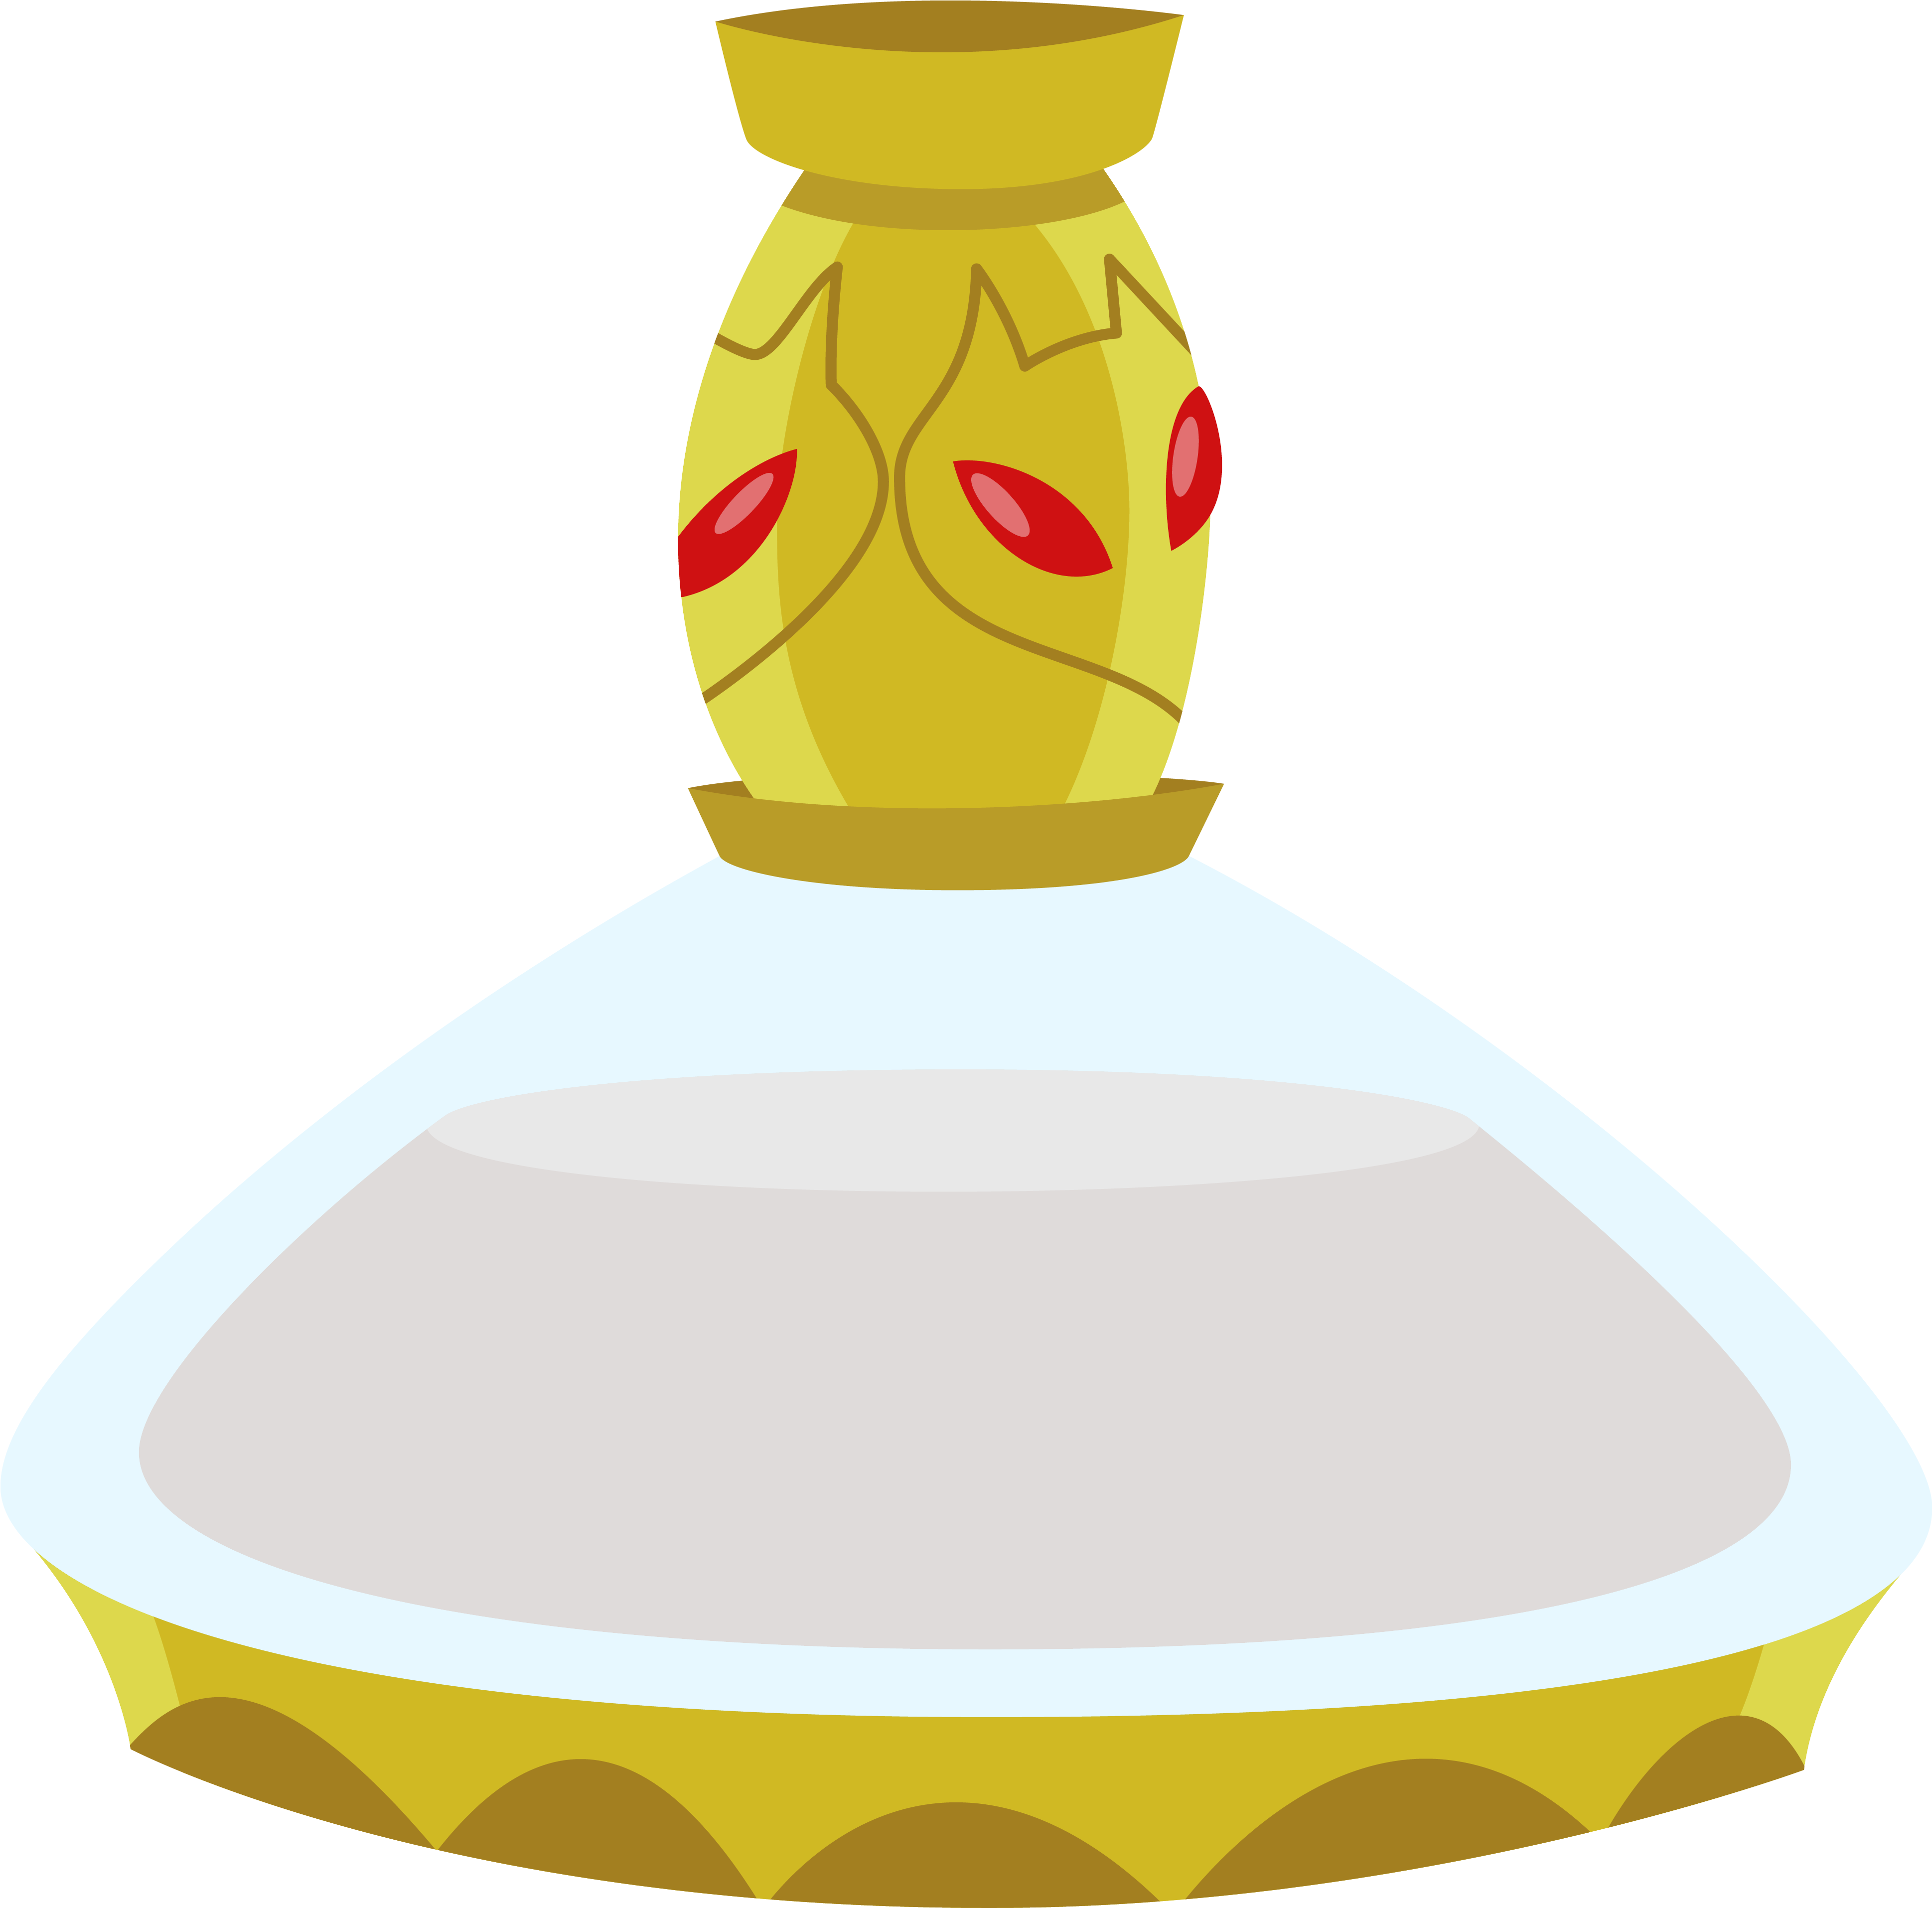 The Flask By Glitchking123 On Deviantart - Winged Unicorn (3876x3923)